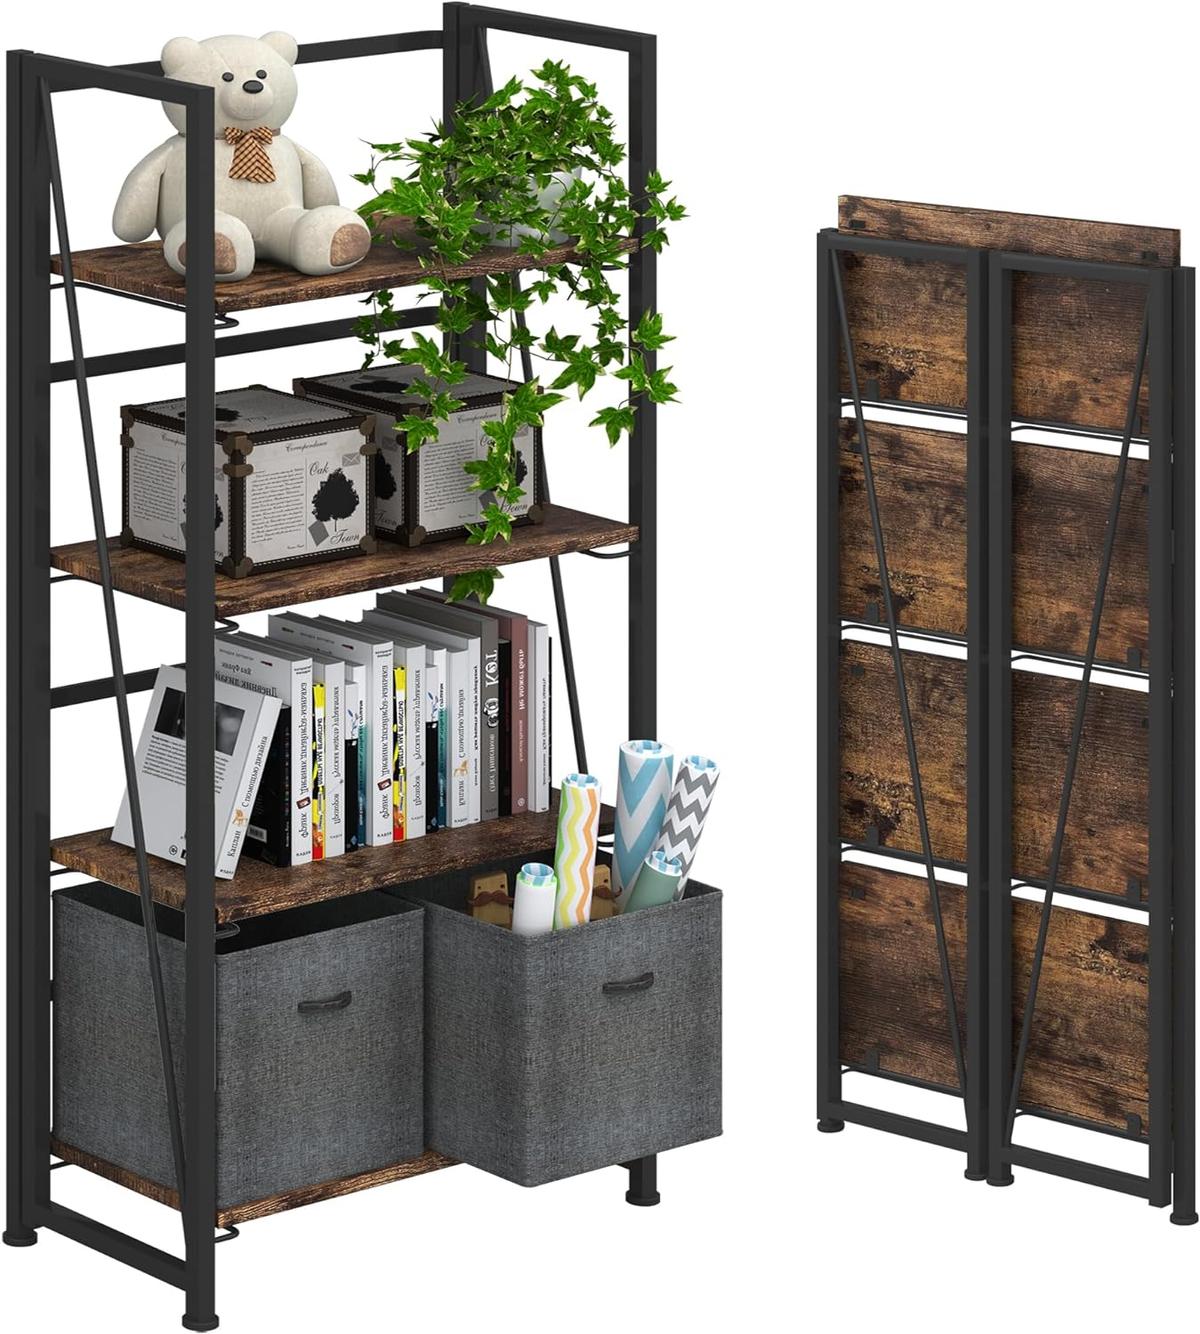 4NM No-Assembly Folding Bookshelf Storage Shelves, 4 Tiers, (Rustic Brown&Black), Retail $130.00